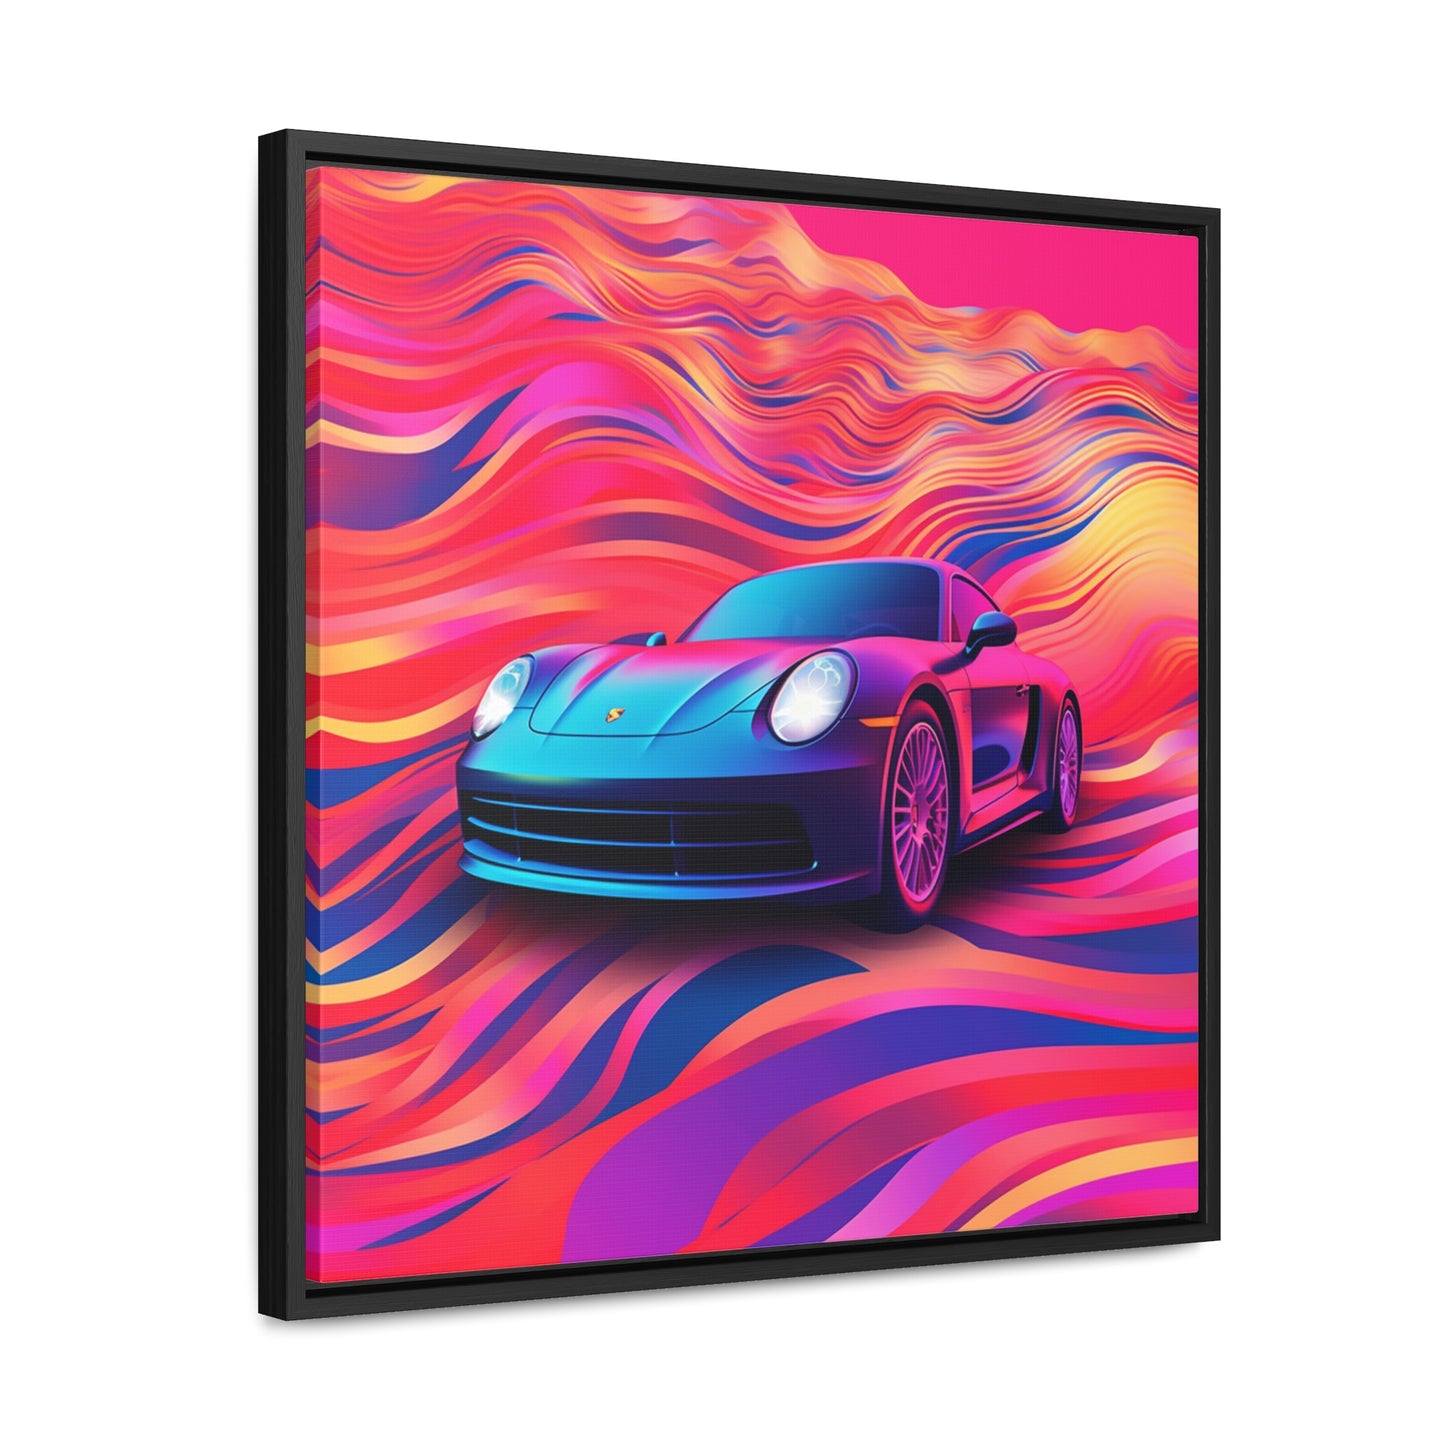 Gallery Canvas Wraps, Square Frame Porsche Water Fusion 3